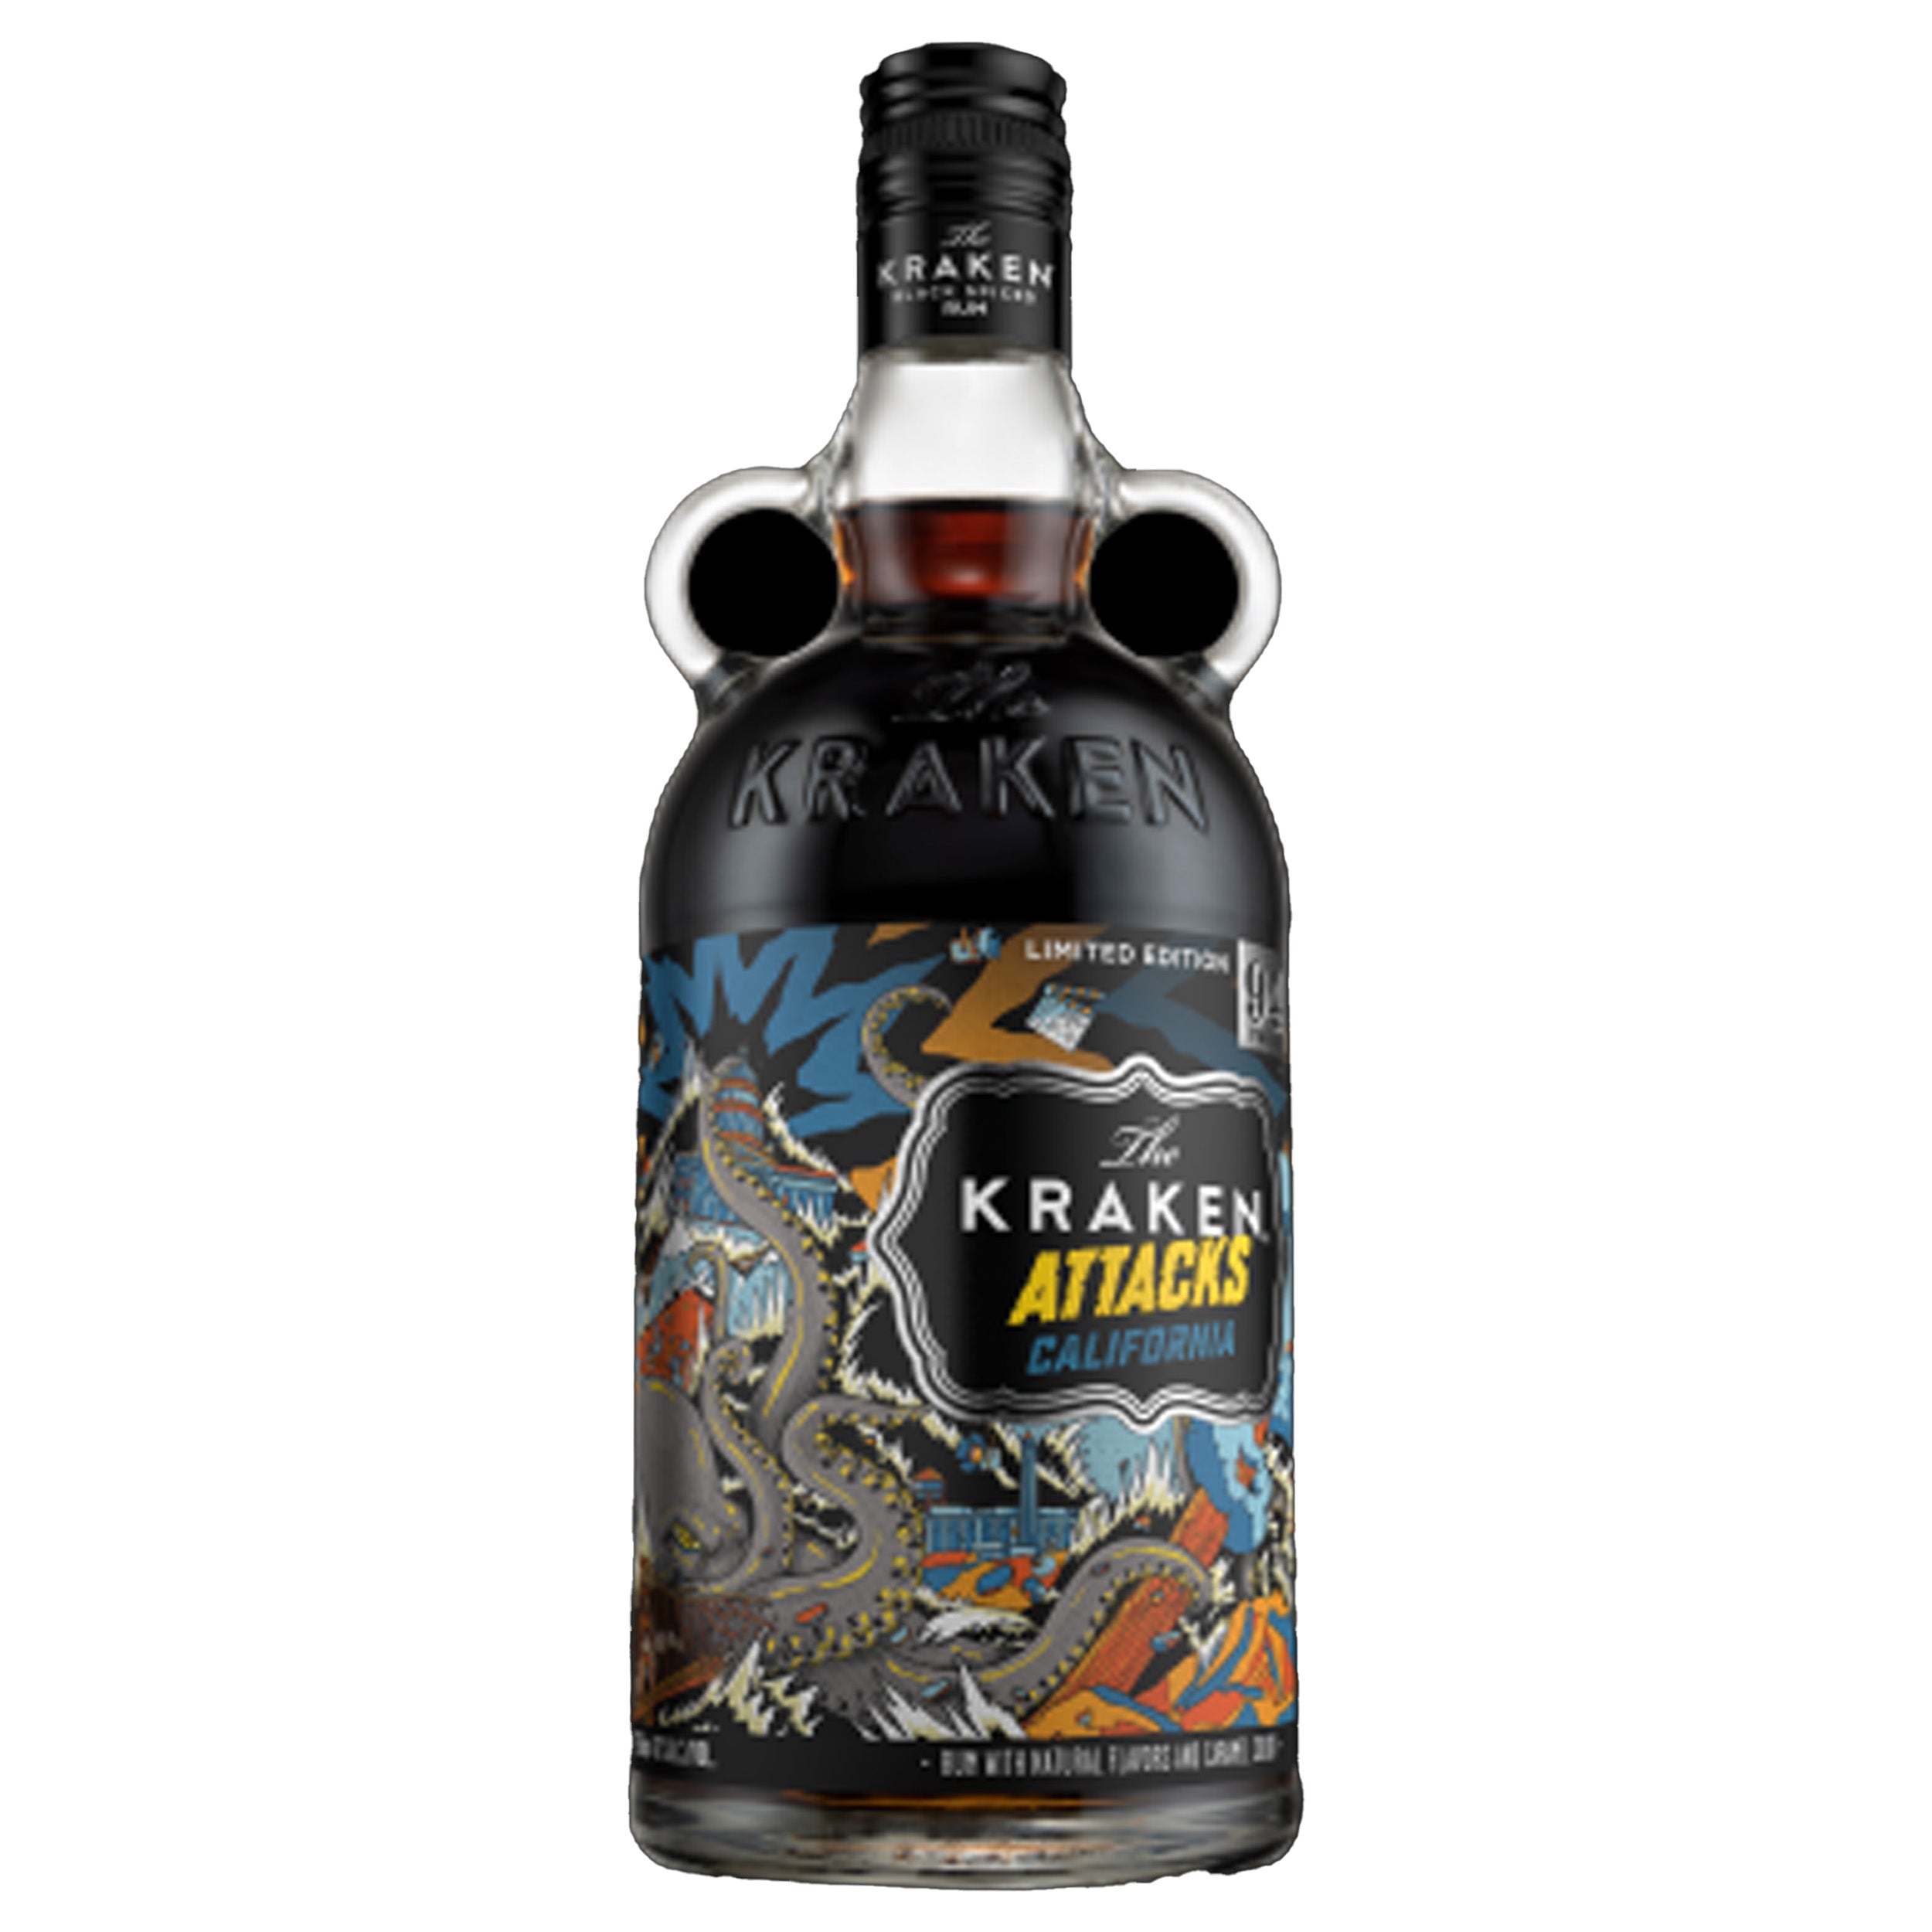 Kraken Attacks California Black Spiced Rum